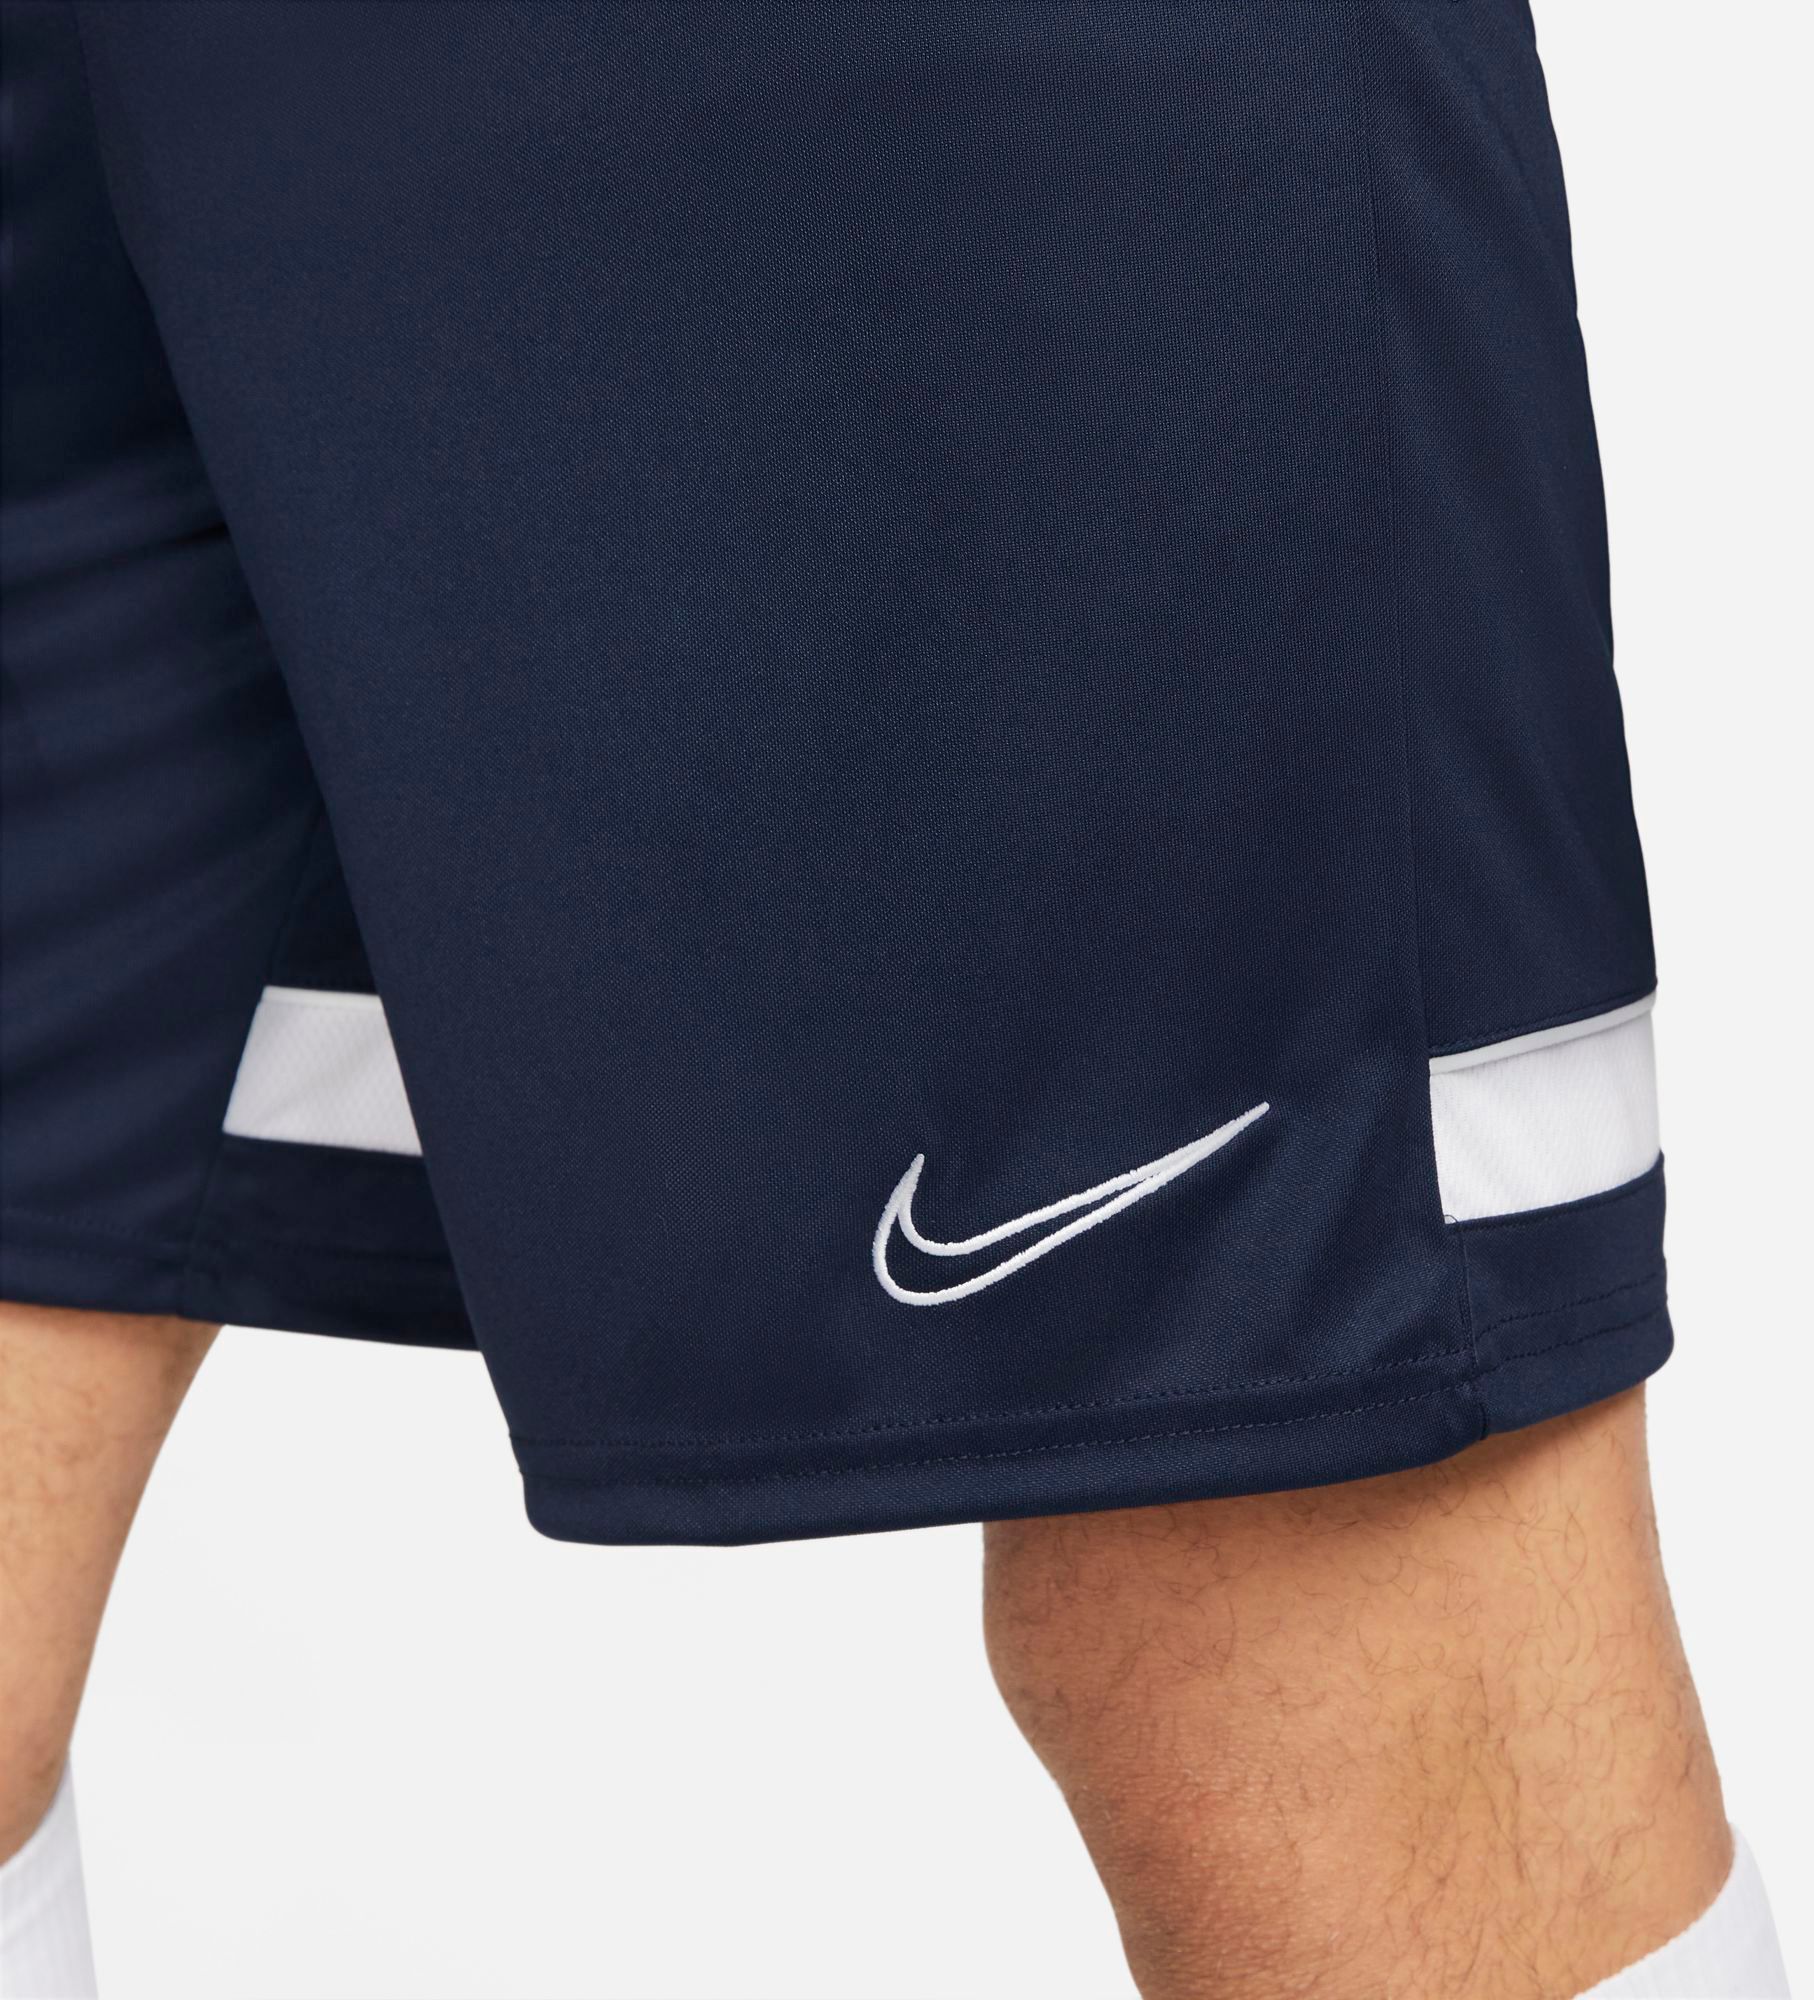 Nike Dri Fit Academy Soccer Shorts (Black/White) - Soccer Wearhouse